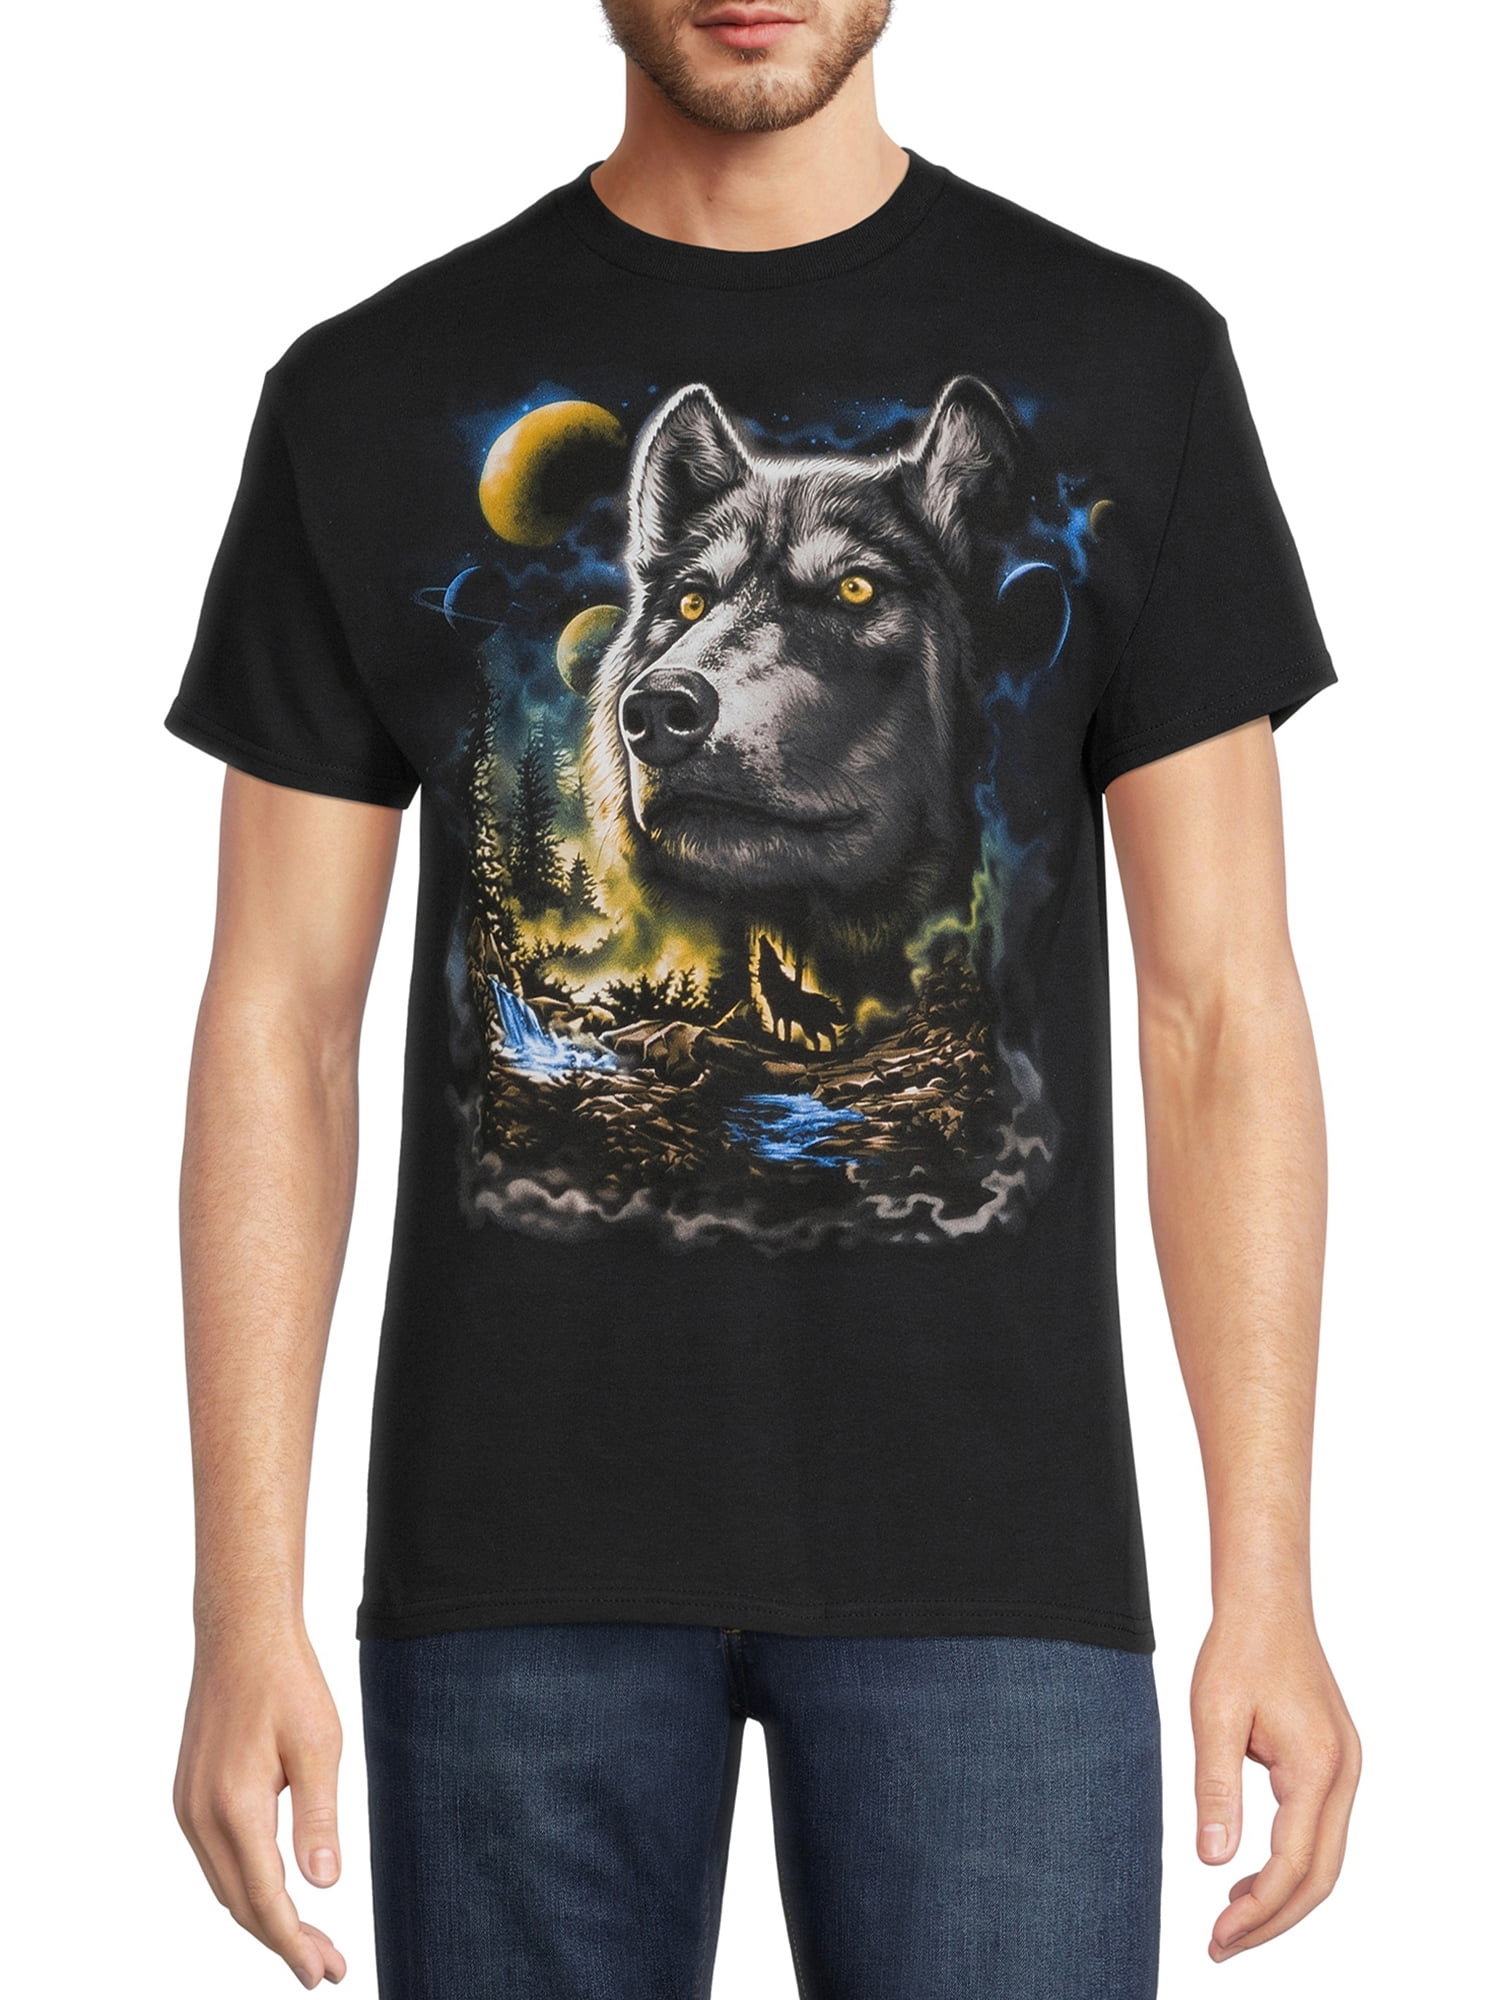 Night Hunt   New Wolf   Sweatshirt/ Longsleeved tshirt   Sizes/Colors 